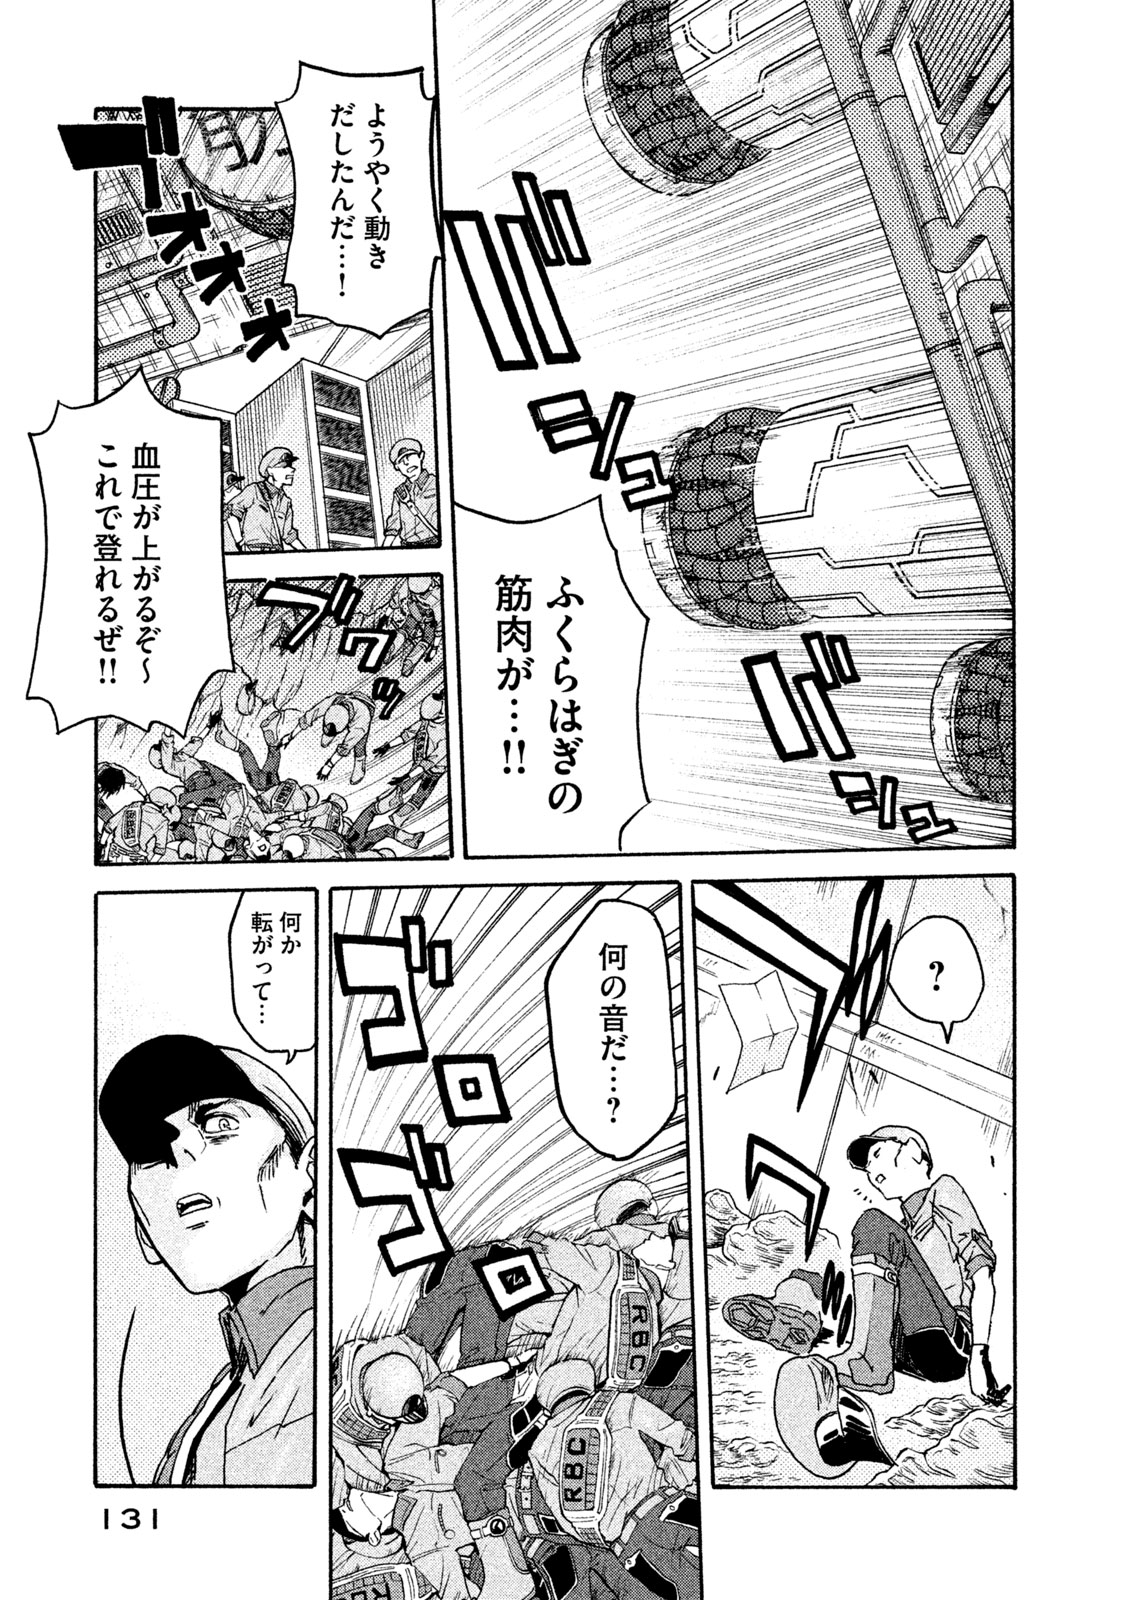 Hataraku Saibou BLACK - Chapter 16 - Page 15